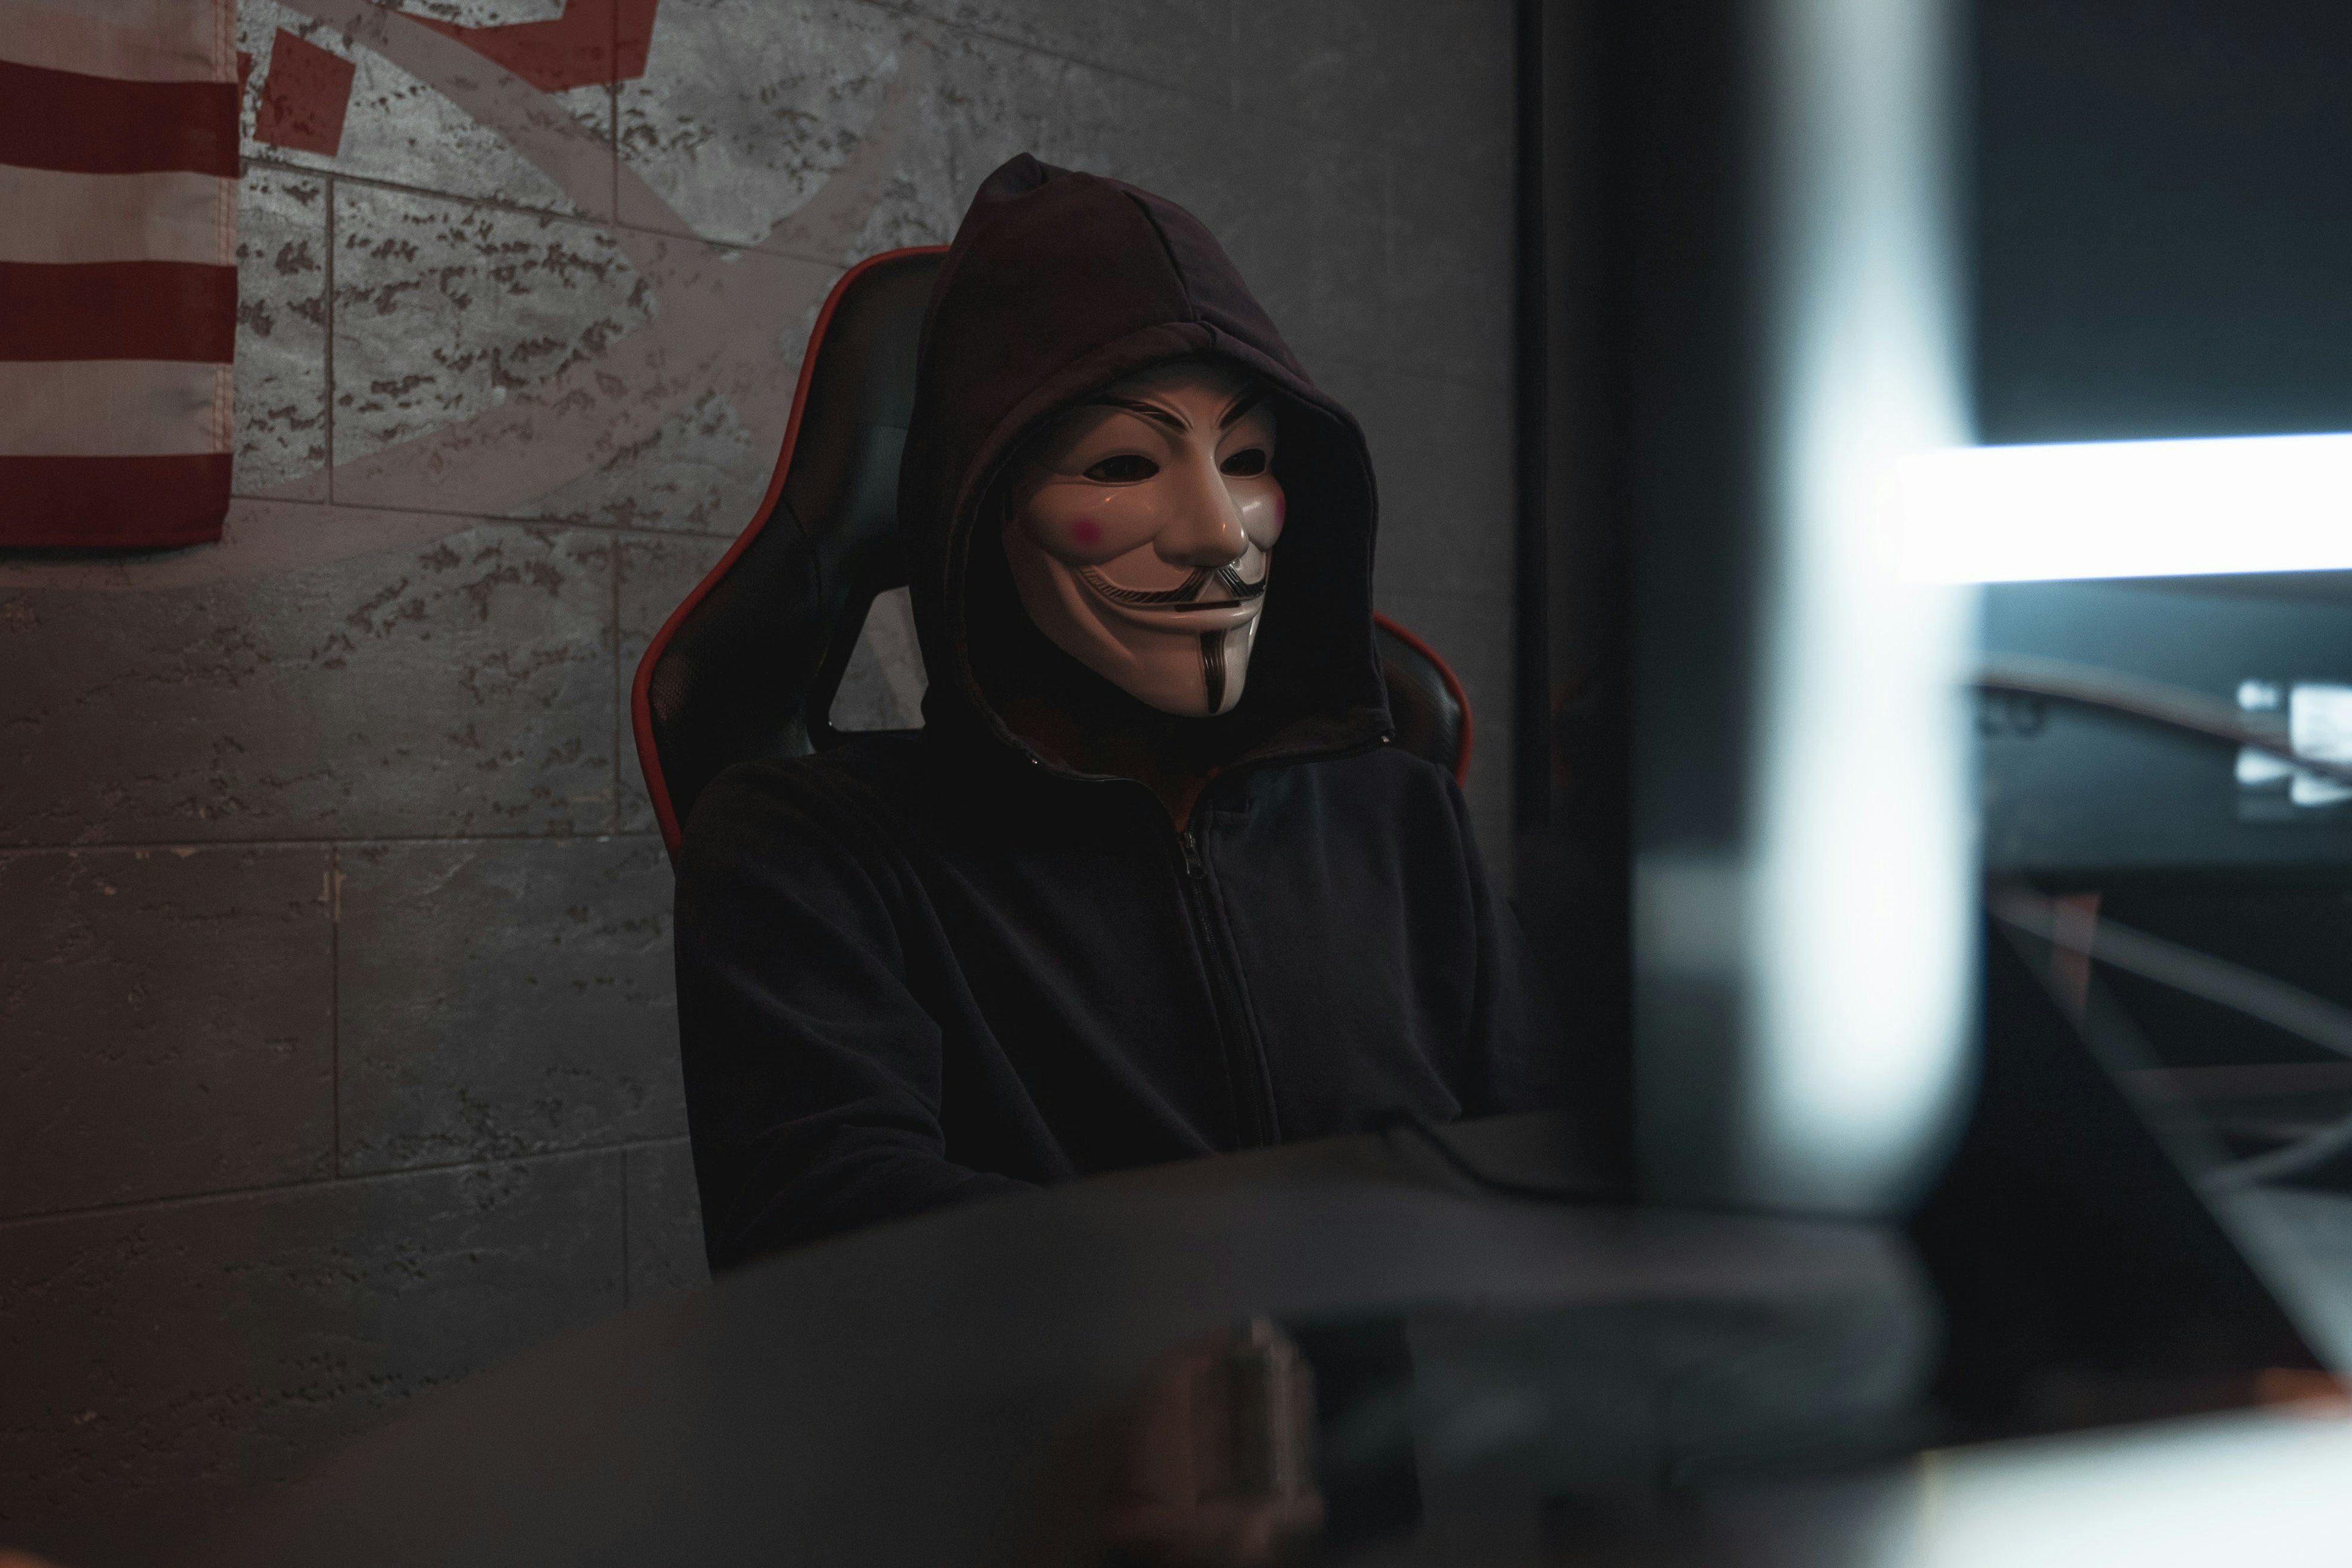 hacker spreading cyberthreats and FUD